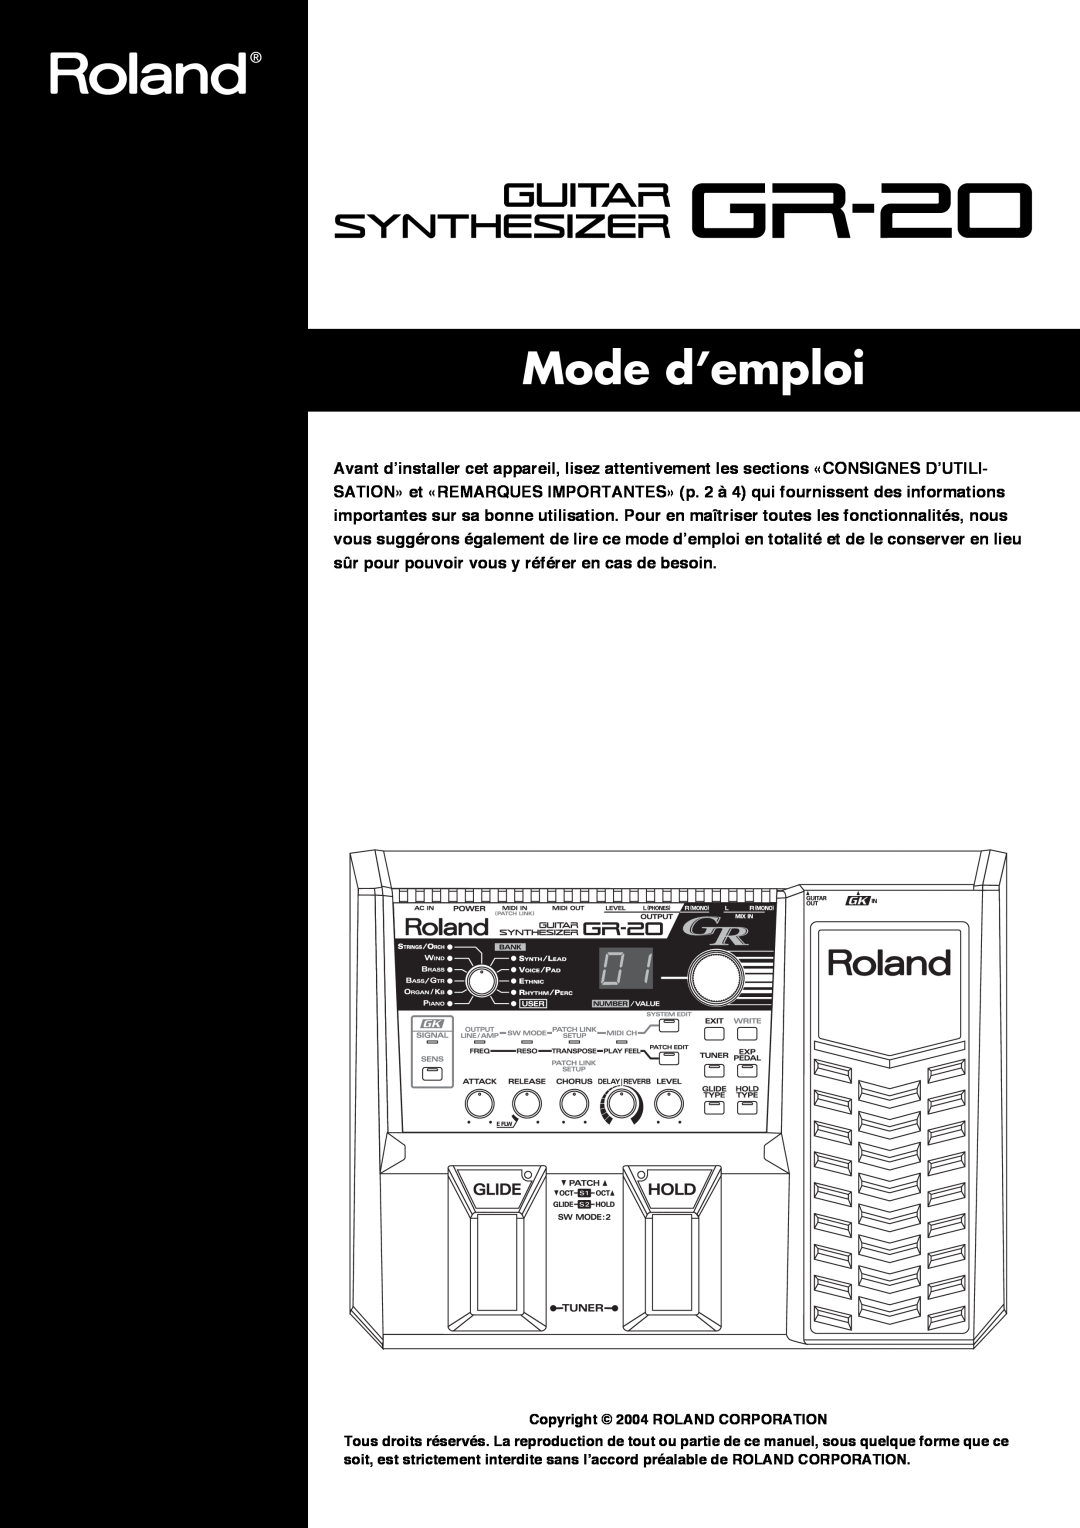 Roland GR-20 manual Mode d’emploi, Copyright 2004 ROLAND CORPORATION 